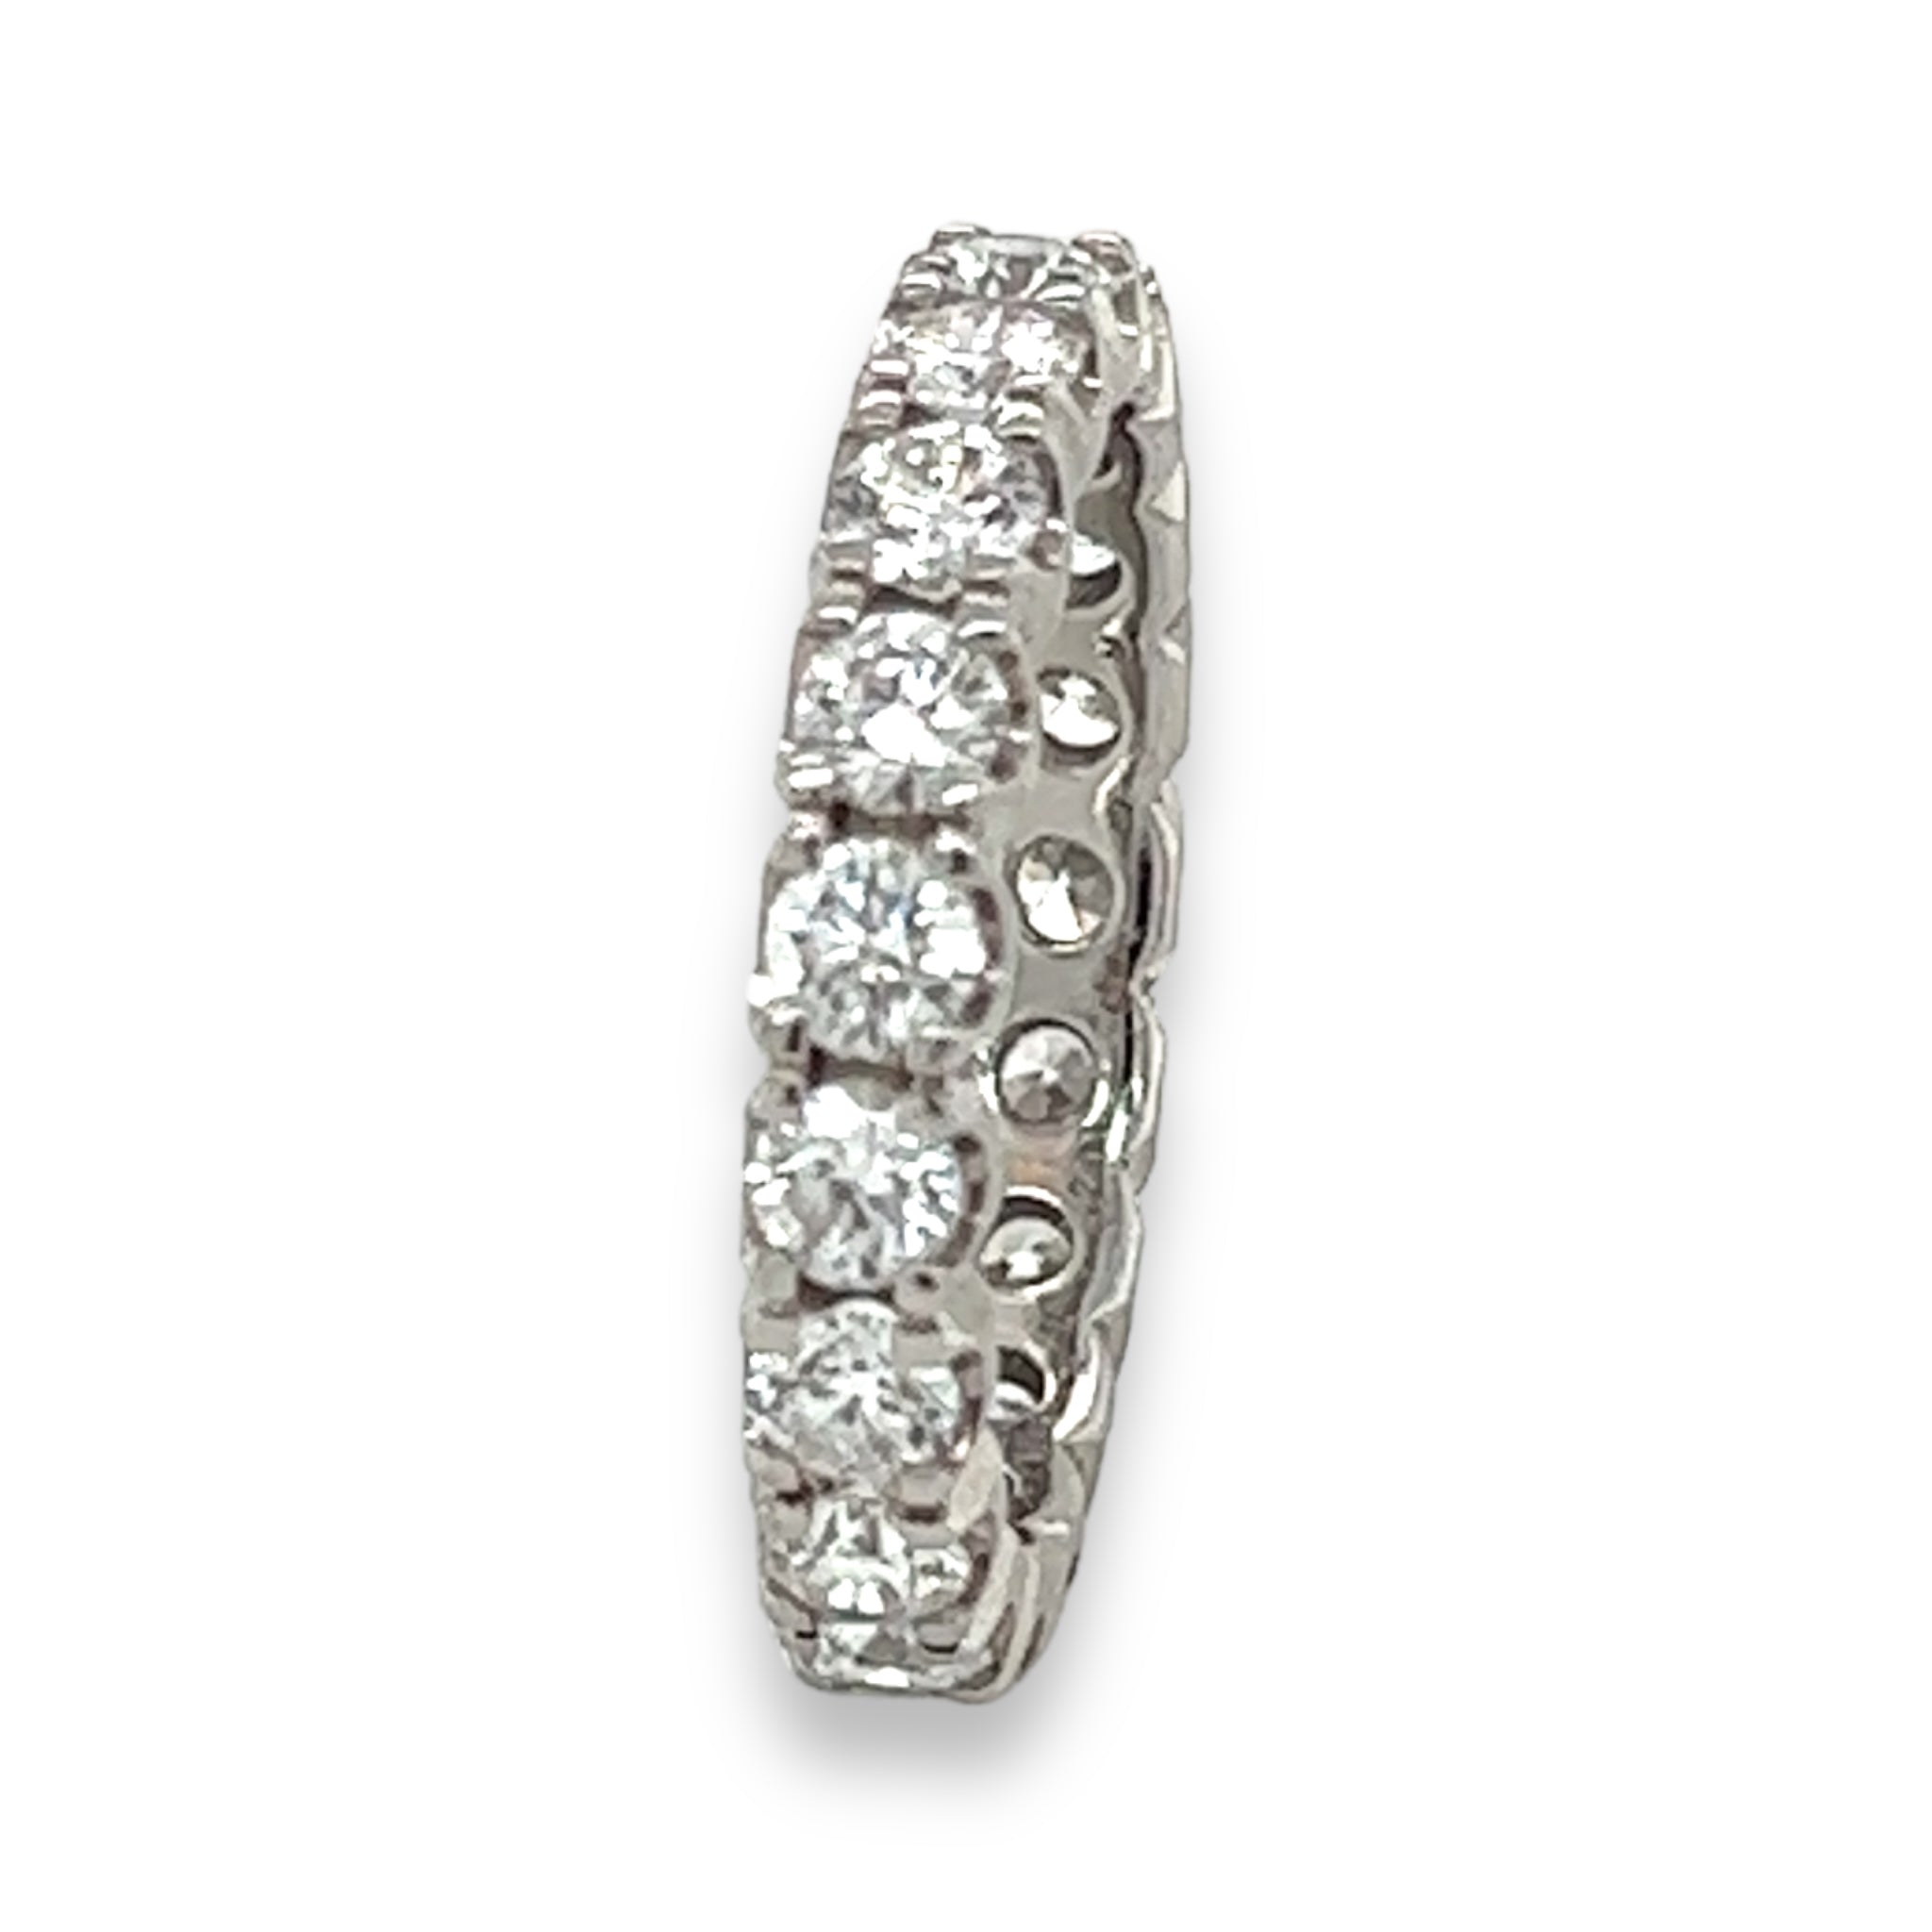 2ct Diamond Eternity Ring in Platinum - Wildsmith Jewellery